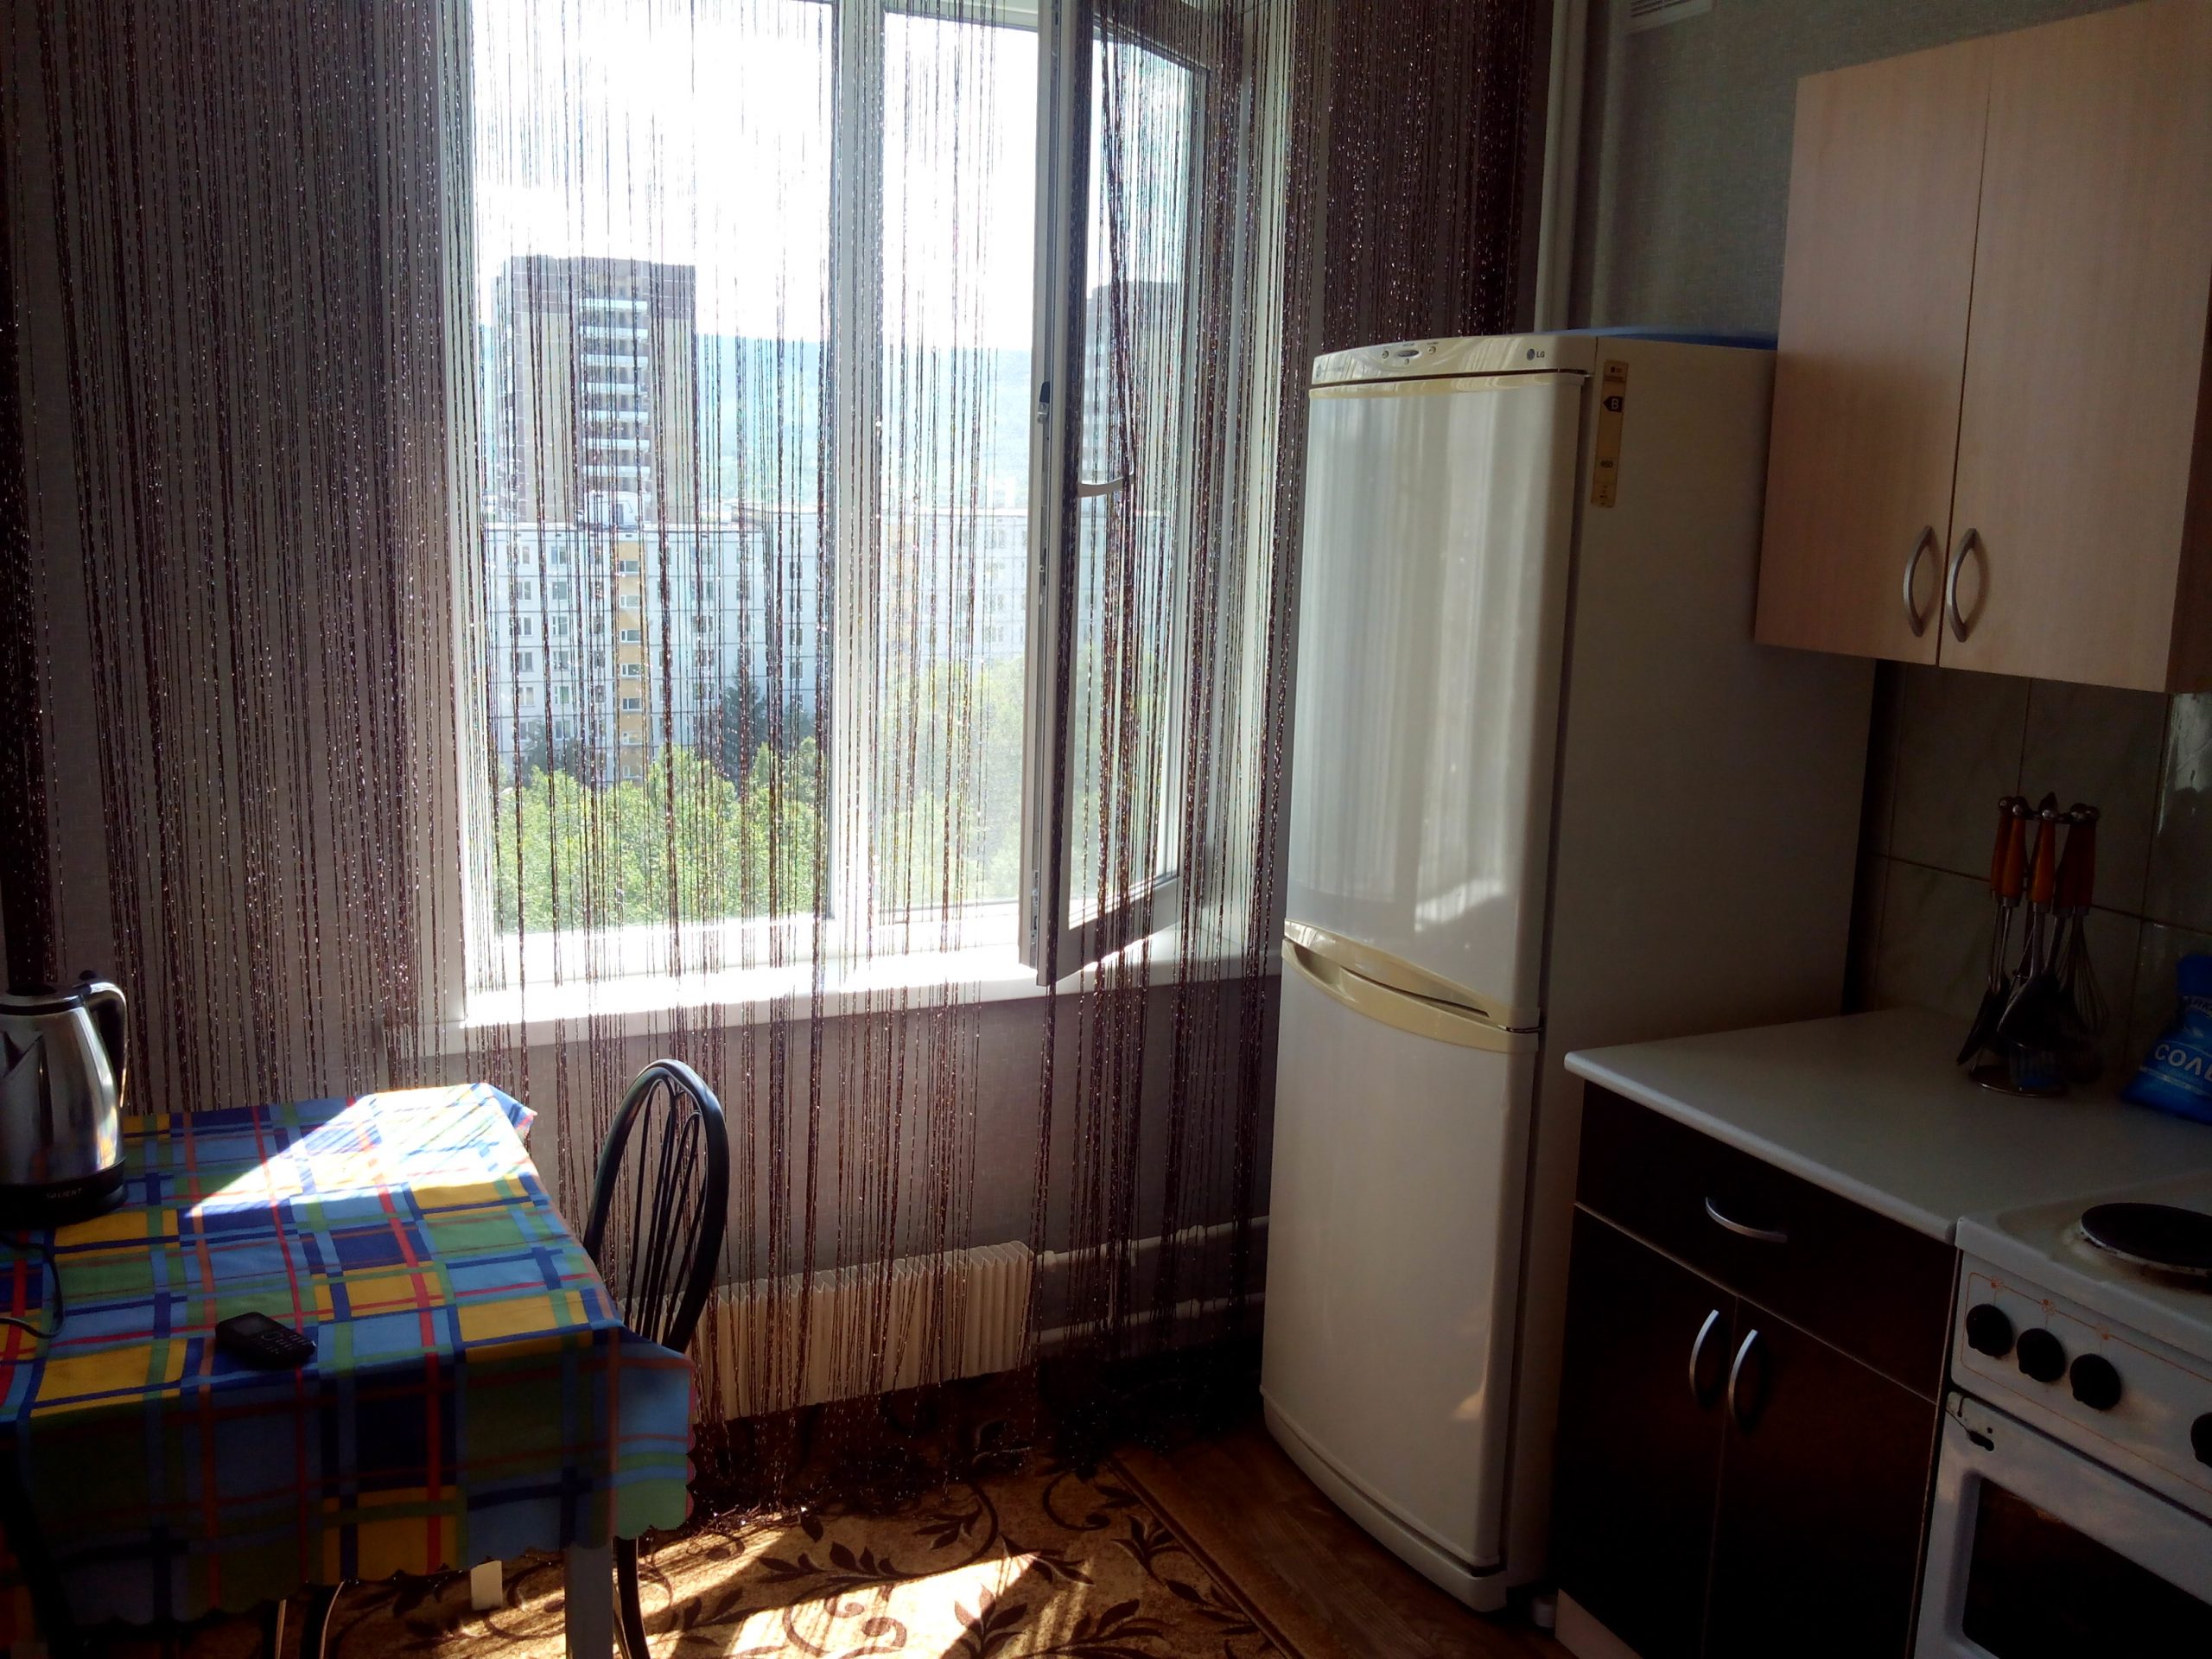 Однокомнатная квартира на ул.Красная Пресня 54 (32кв.м) до 5 гостей